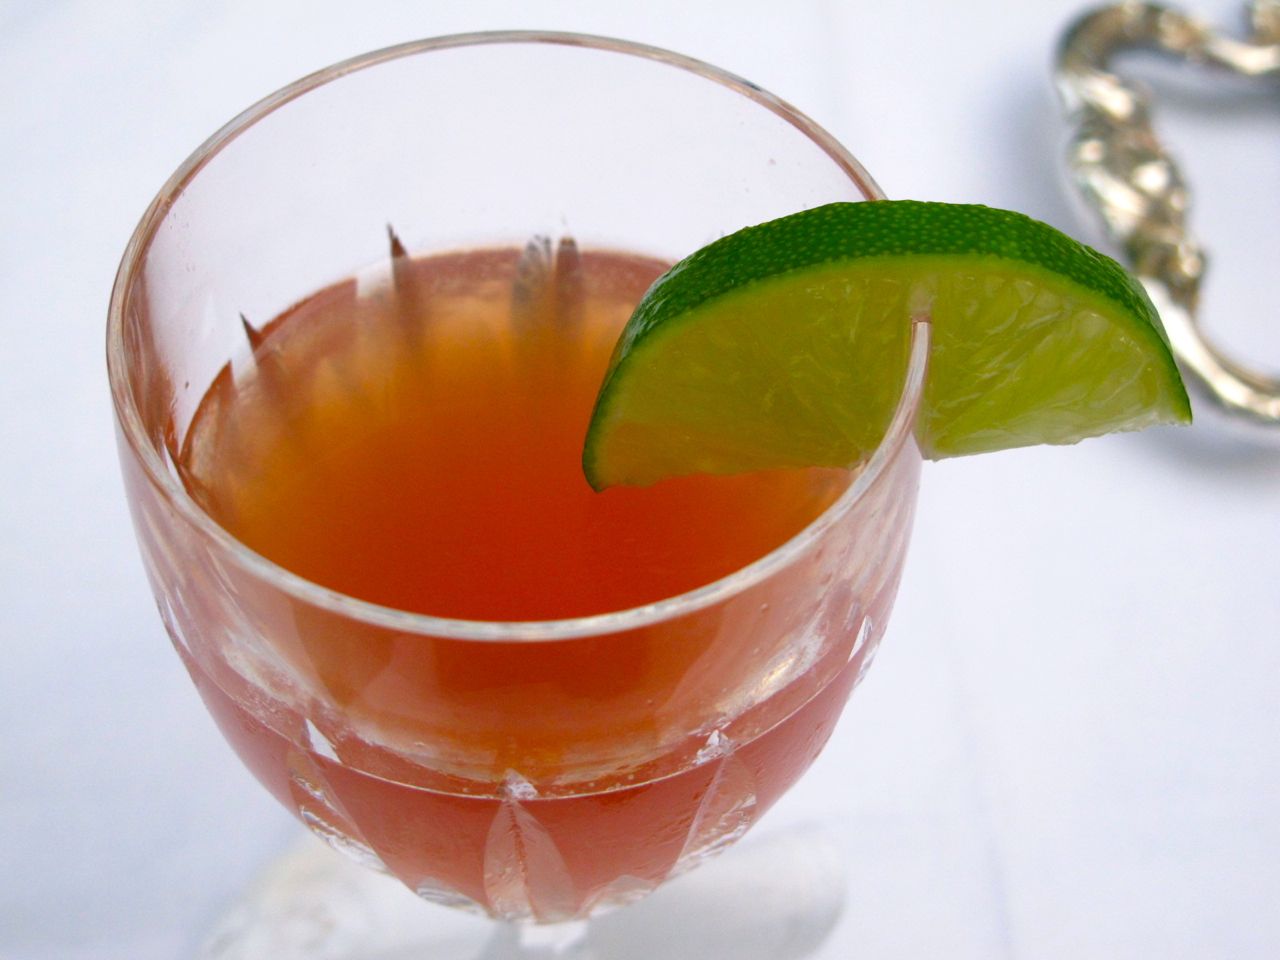 Making a Scarlet O'Hara Cocktail